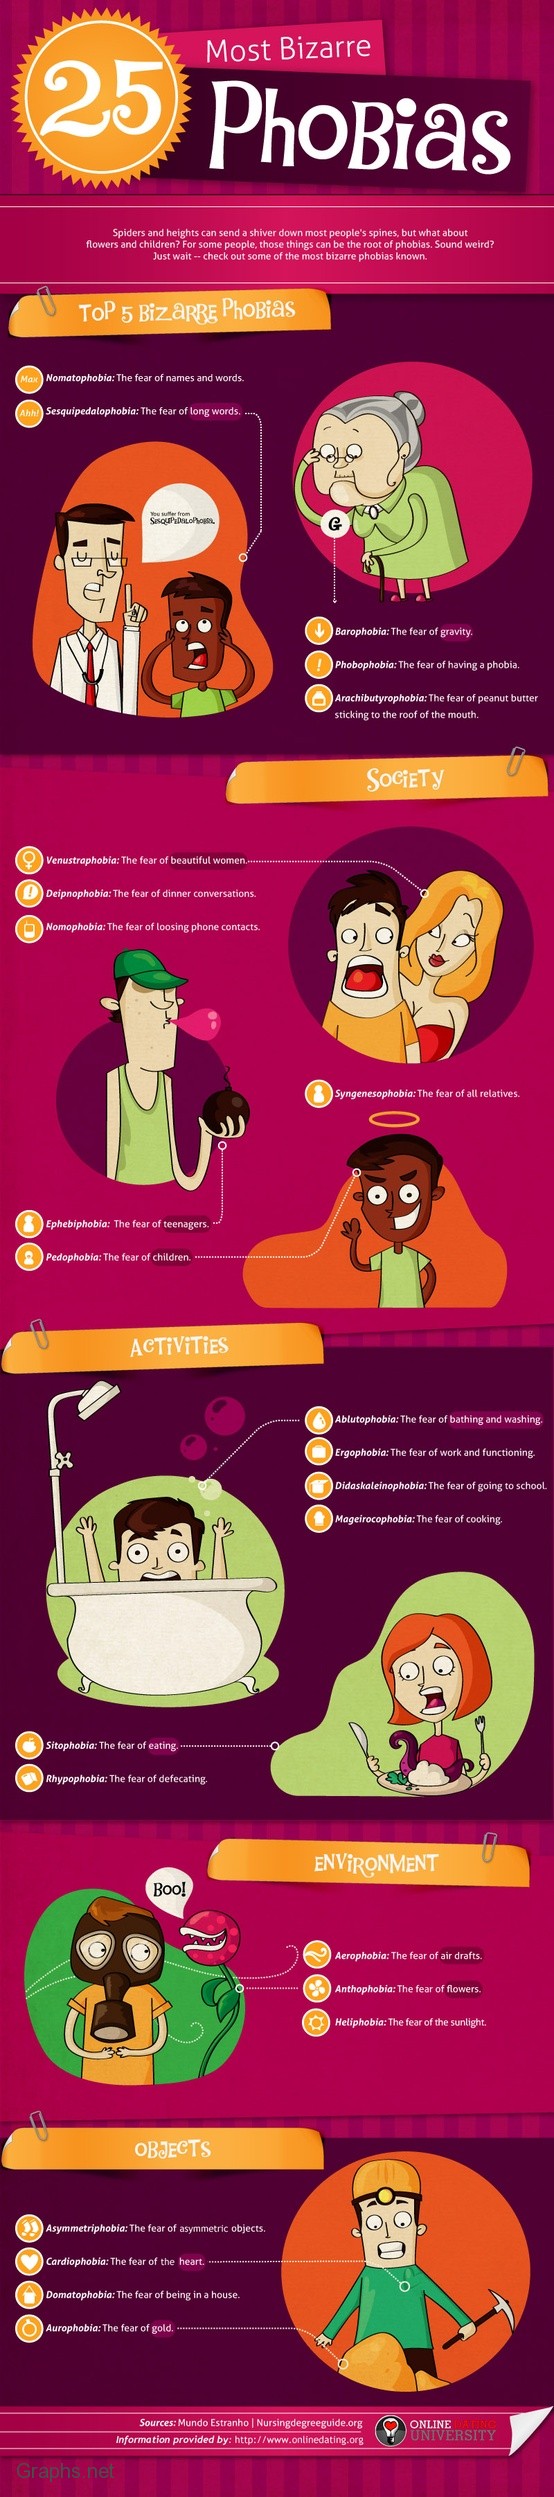 Most Common Types of Phobias